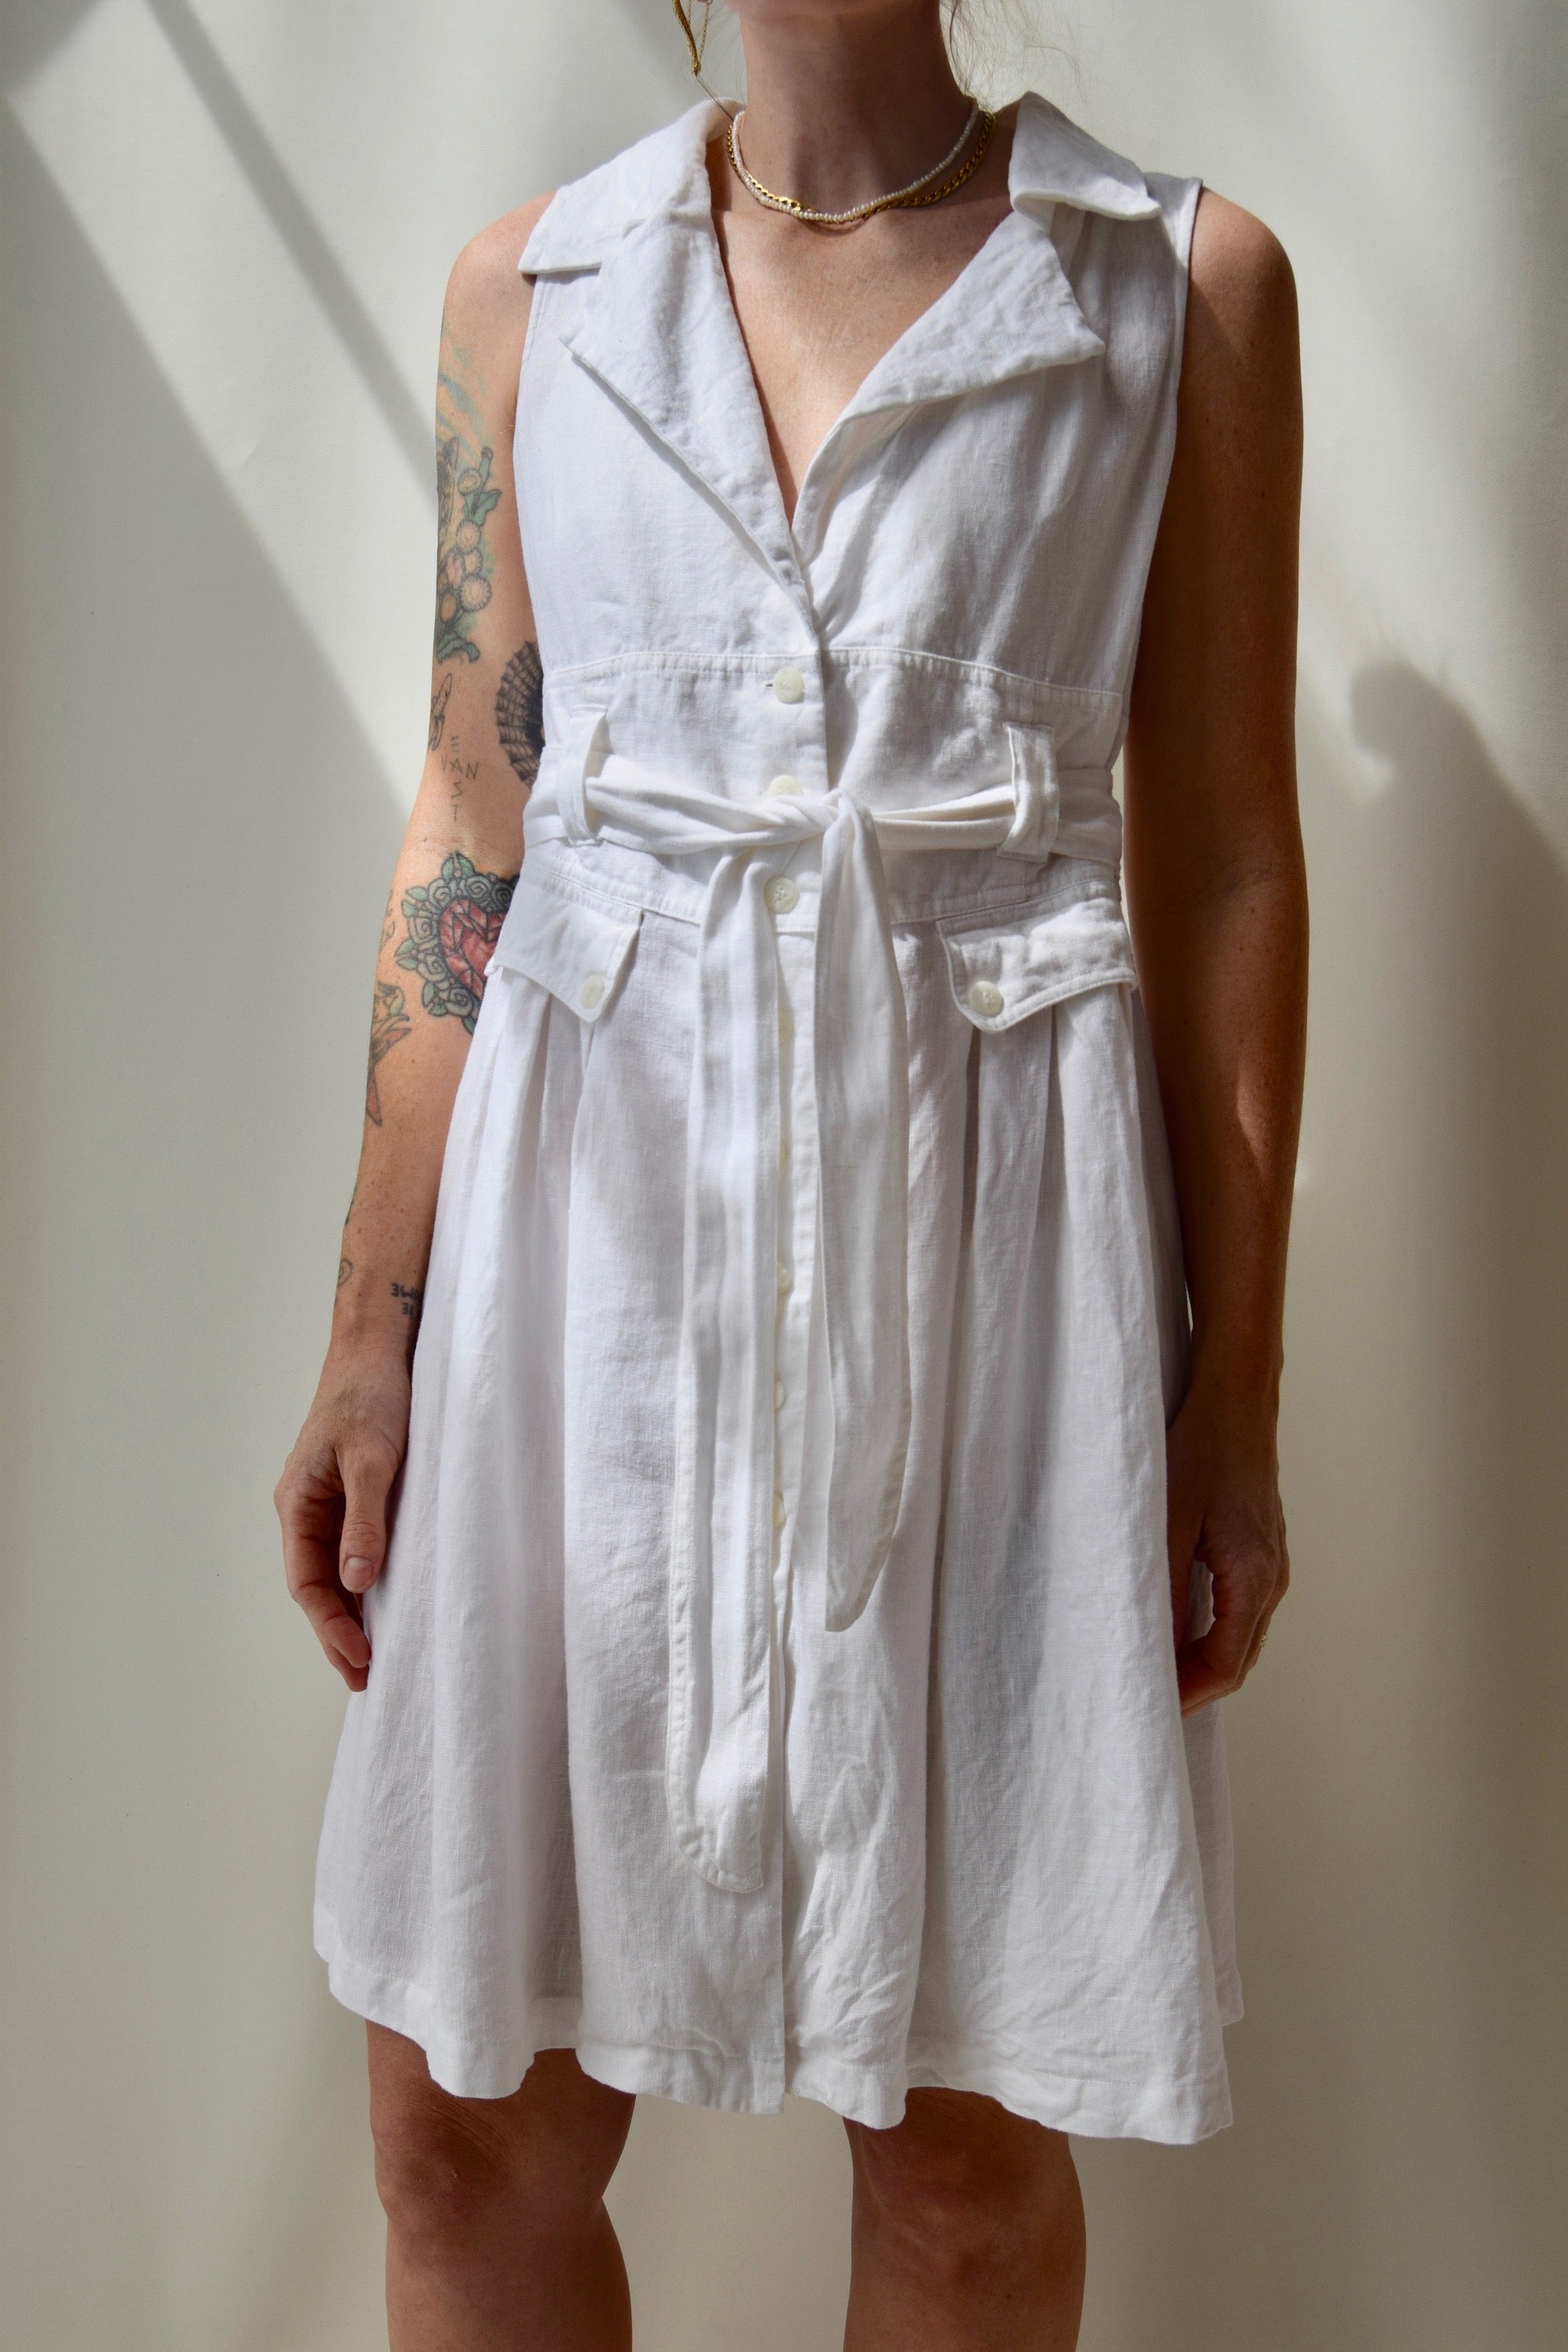 SAND Essential White Linen Dress